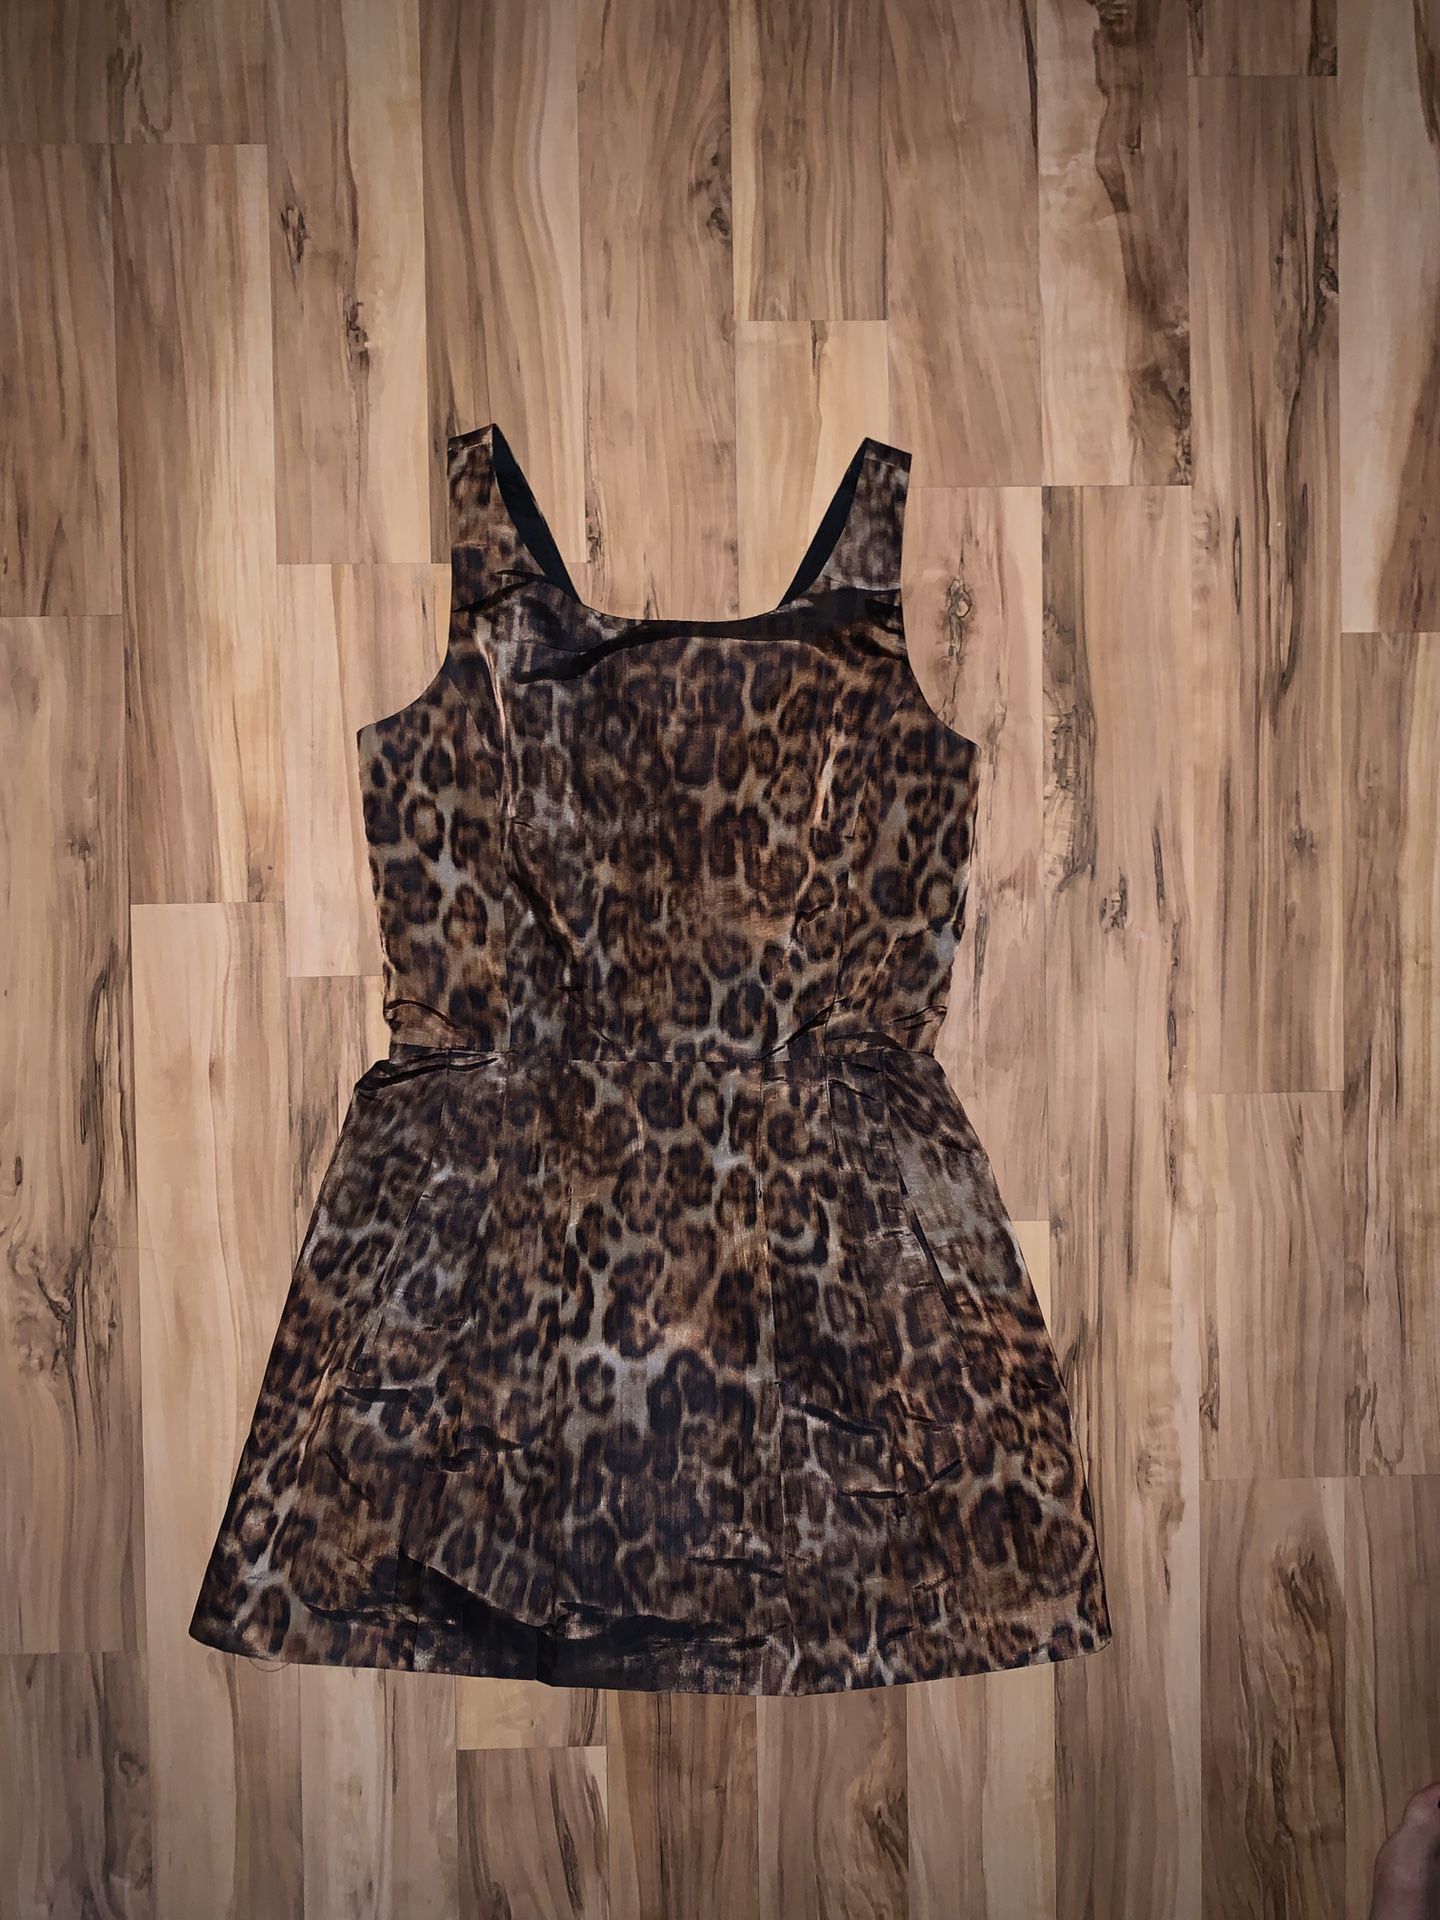 Cheetah Michael Kors Dress - Size 0/2